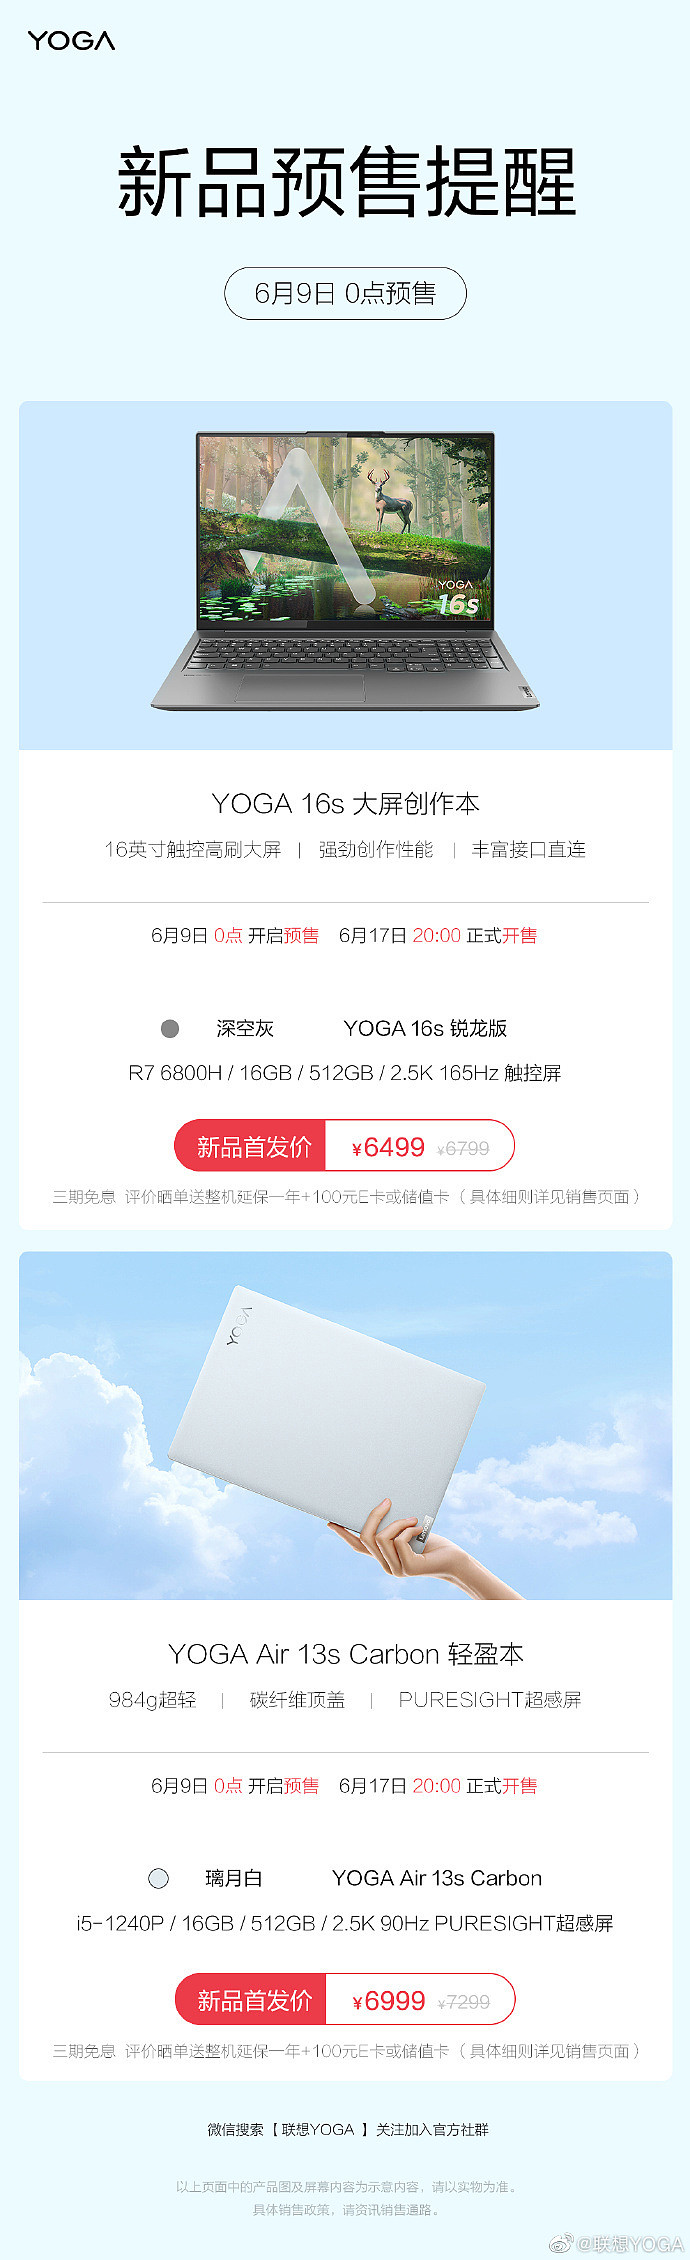 联想新款 YOGA Air 13s / YOGA 16s 笔记本今晚开卖 - 1